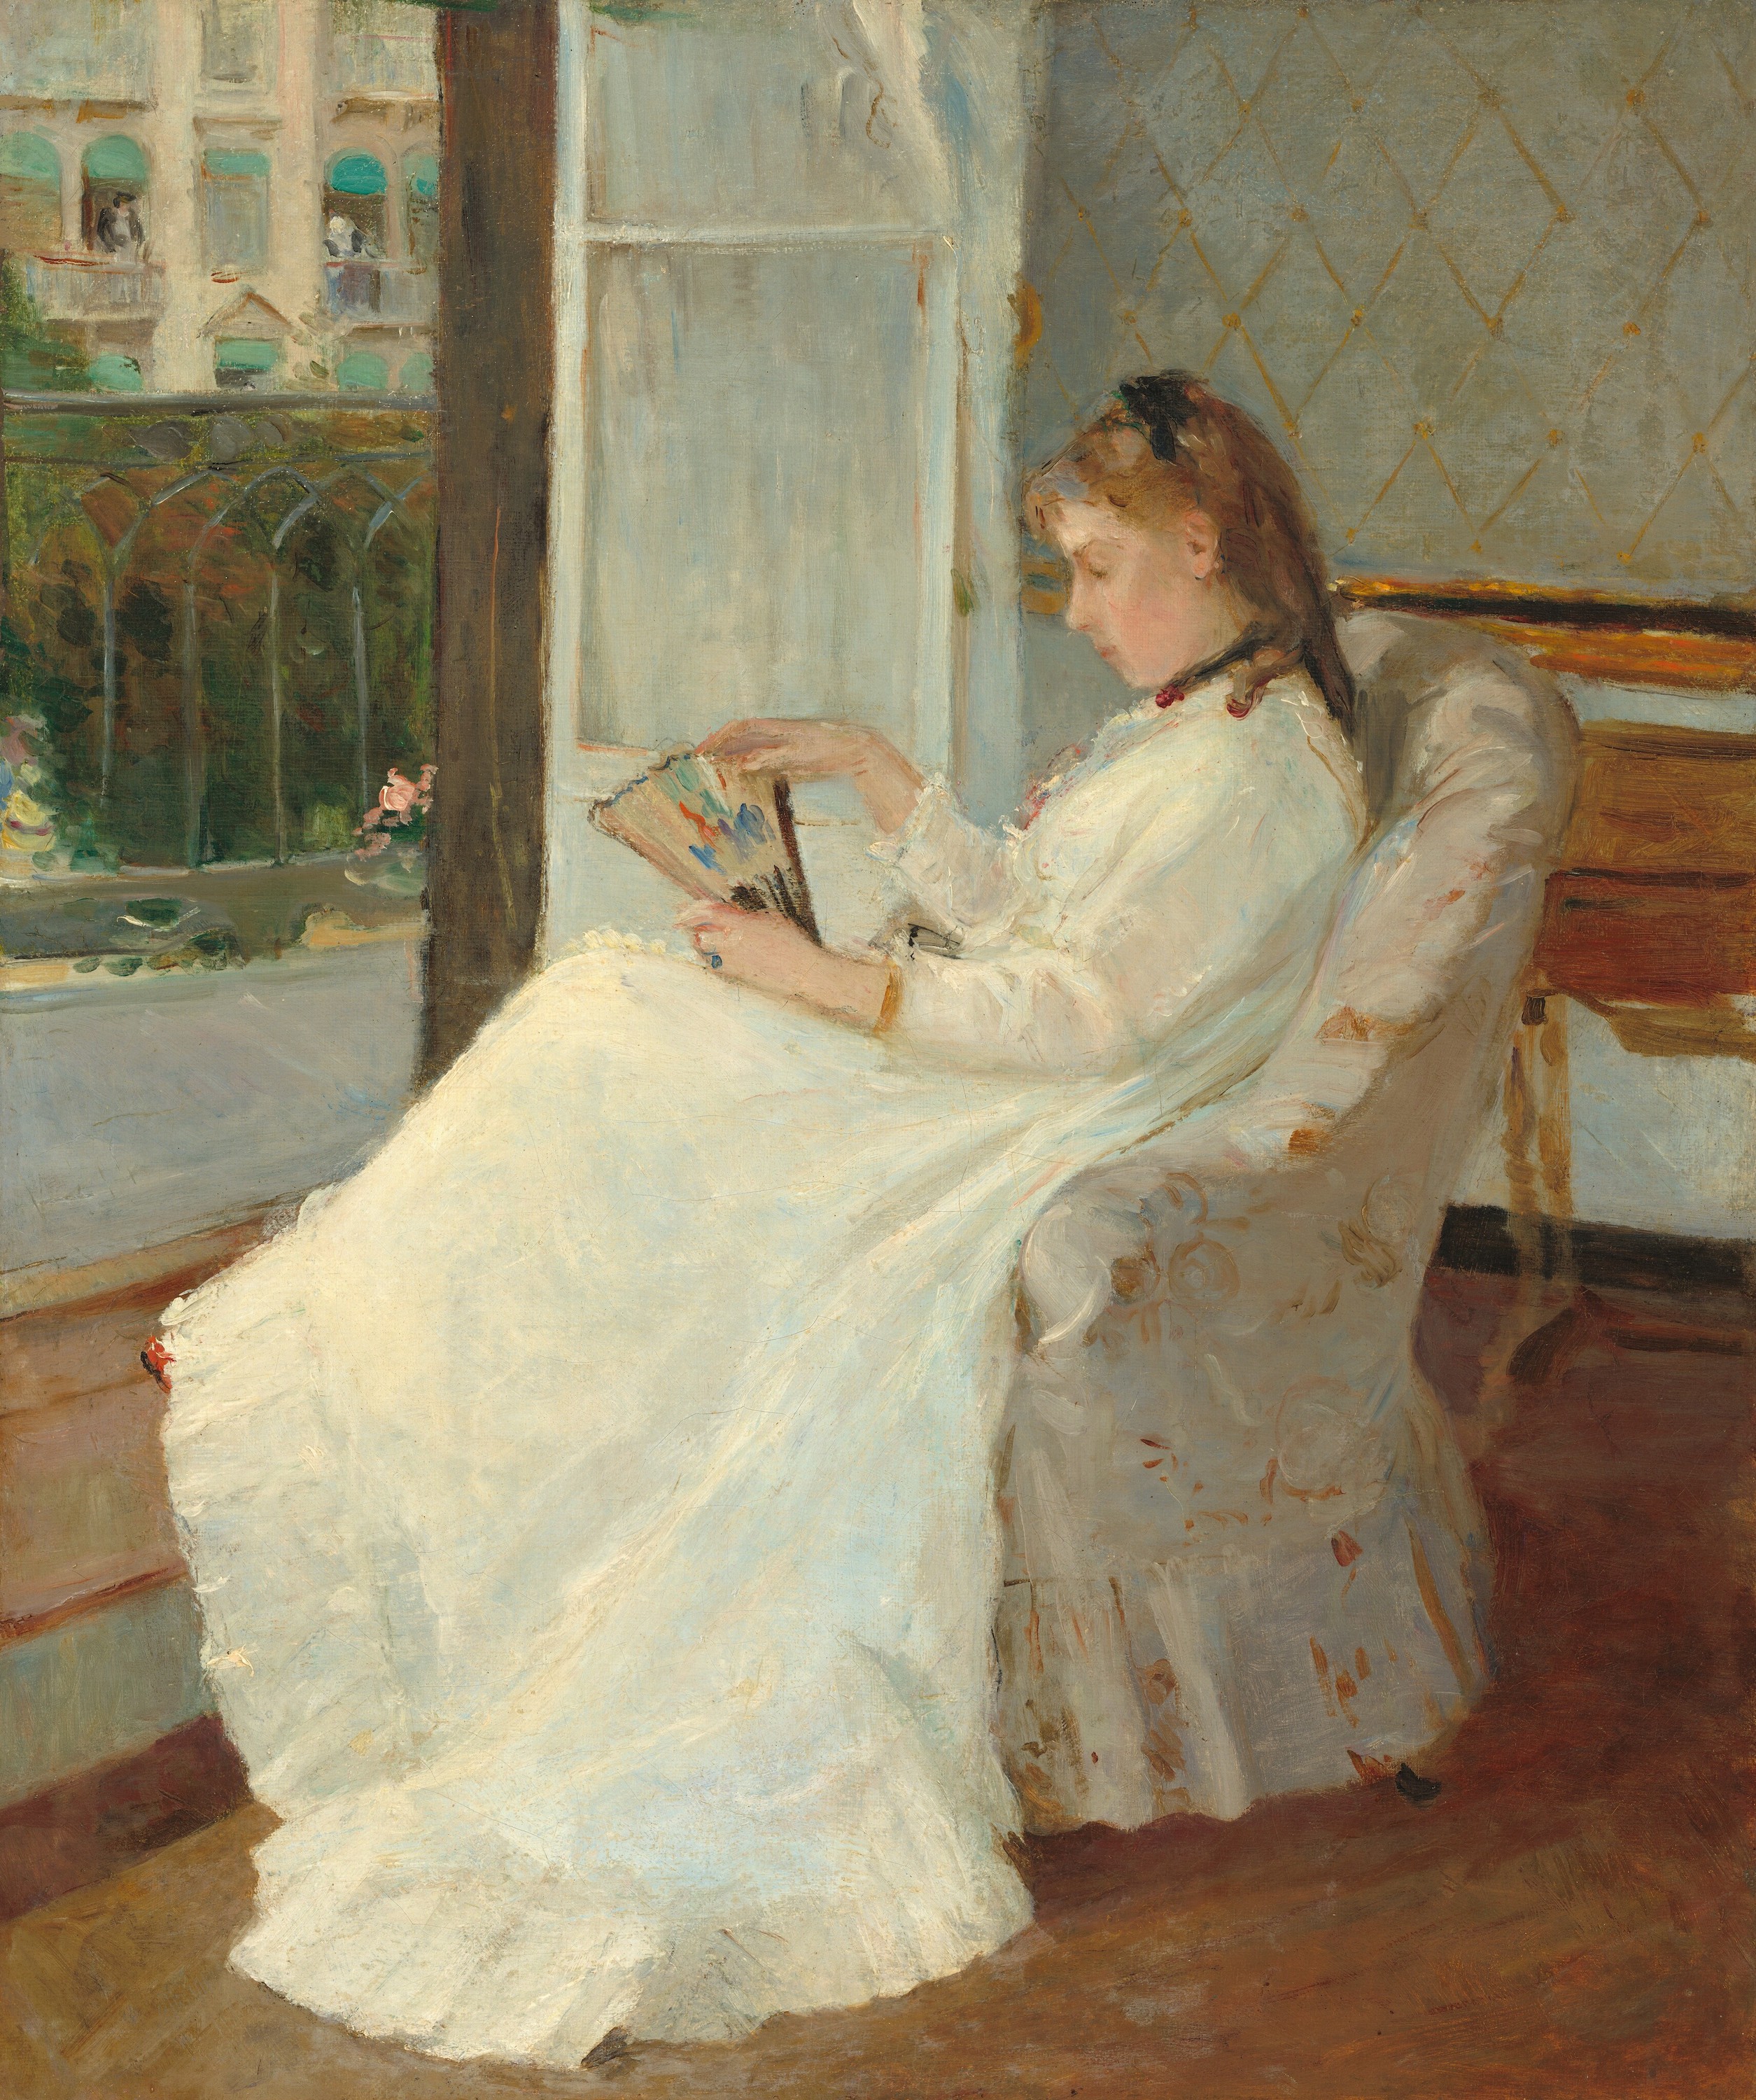 Die Schwester der Künstlerin am Fenster by Berthe Morisot - 1869 - 54,8 x 46,3 cm National Gallery of Art